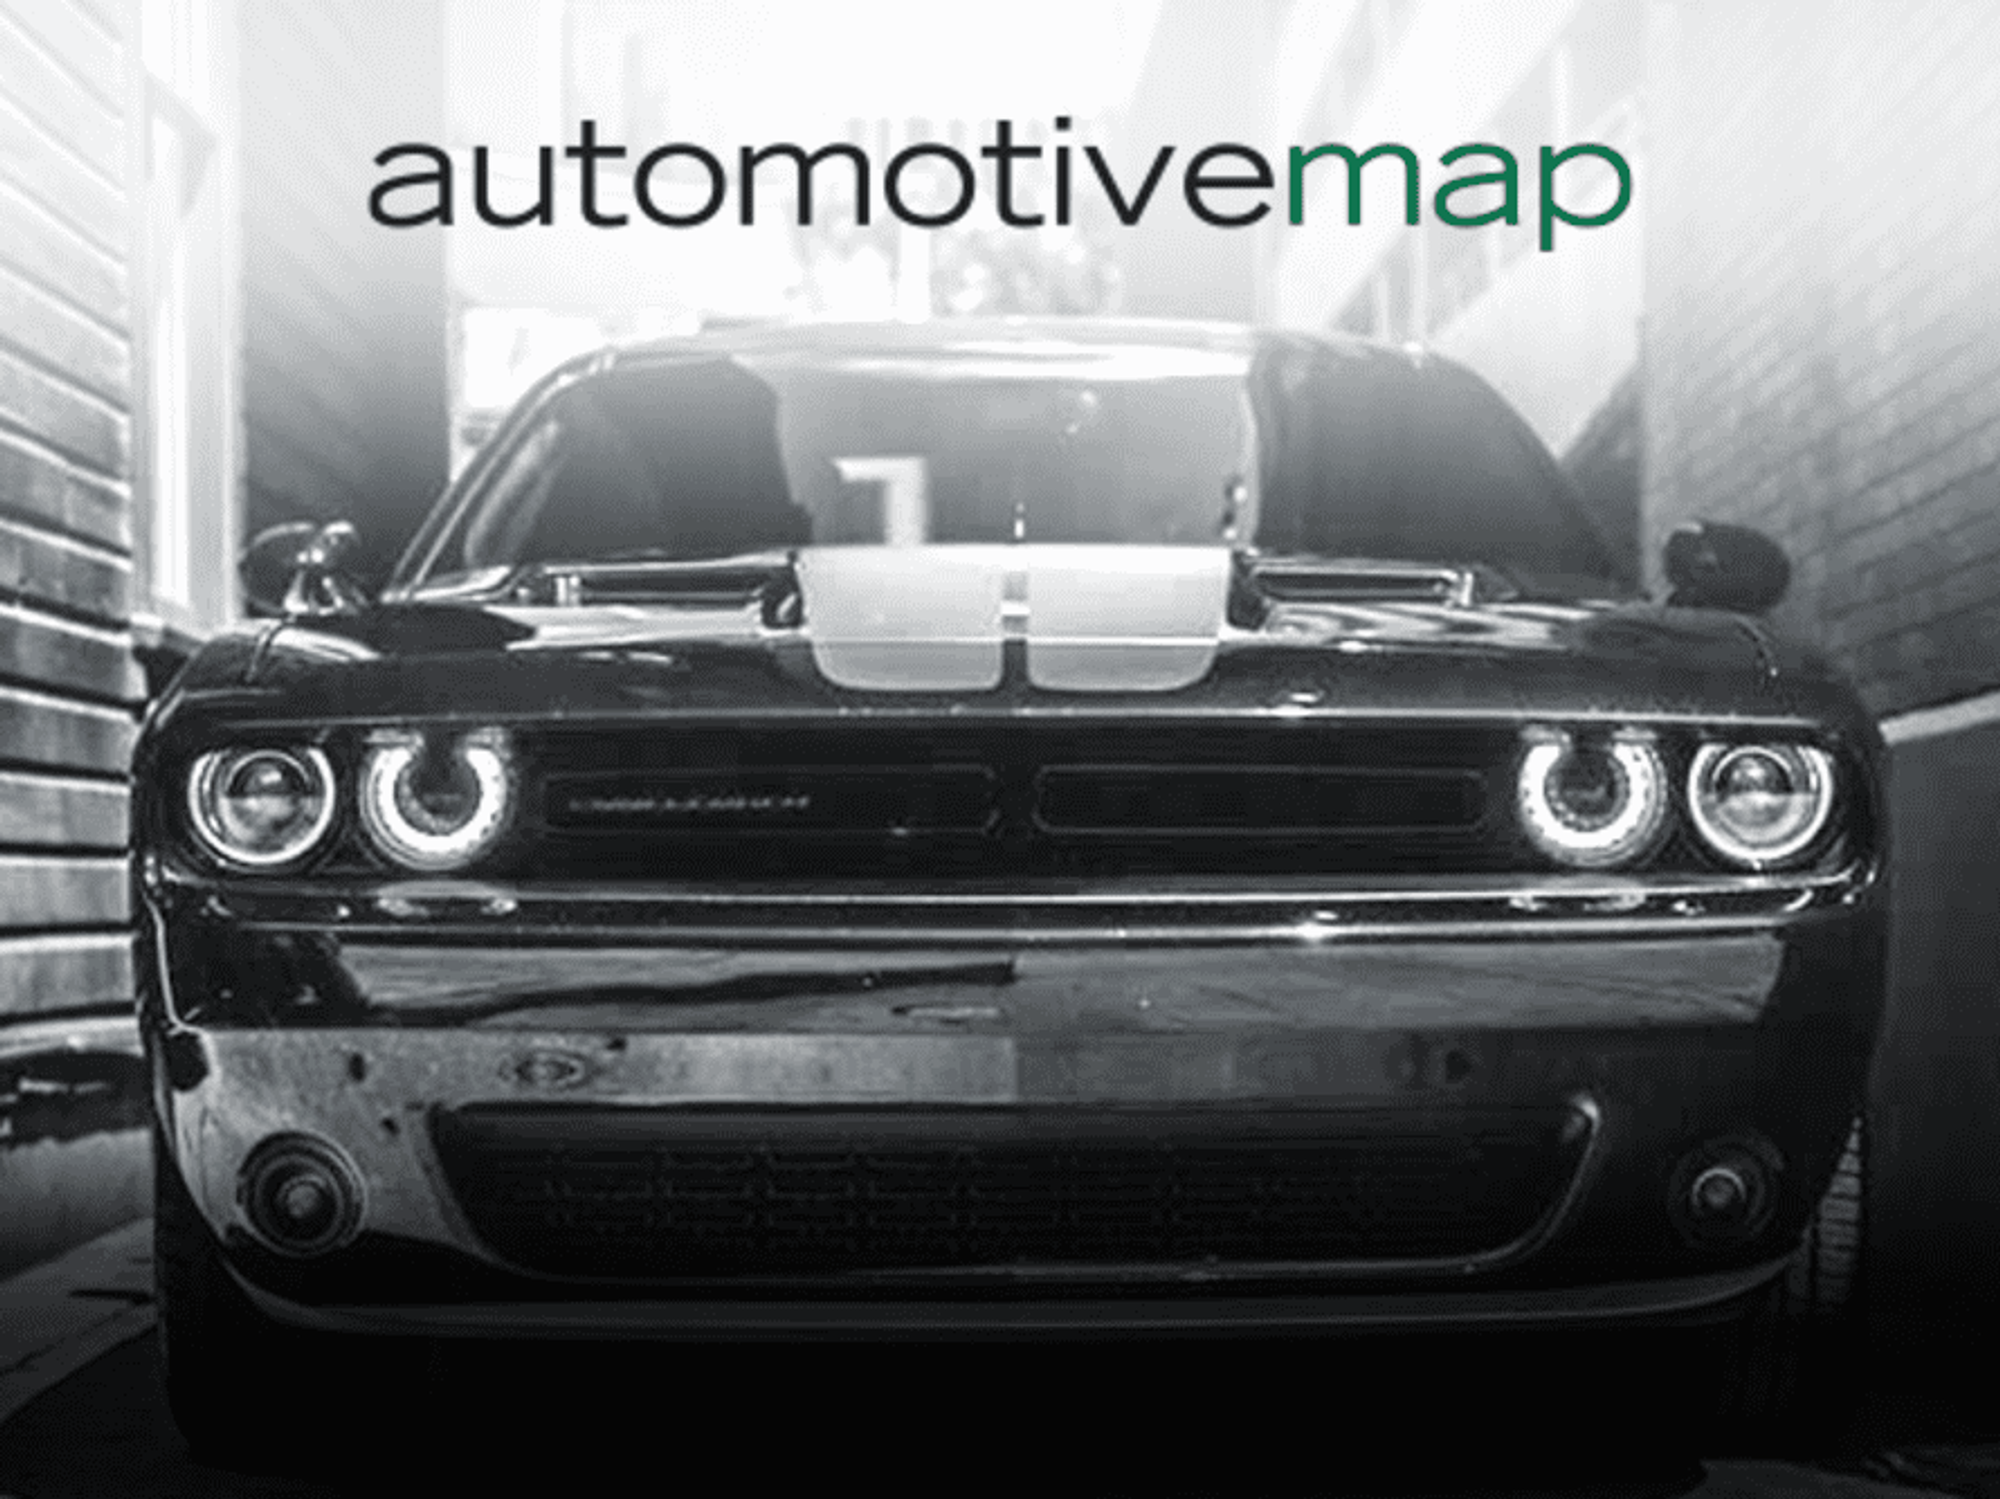 AutomotiveMap graphic